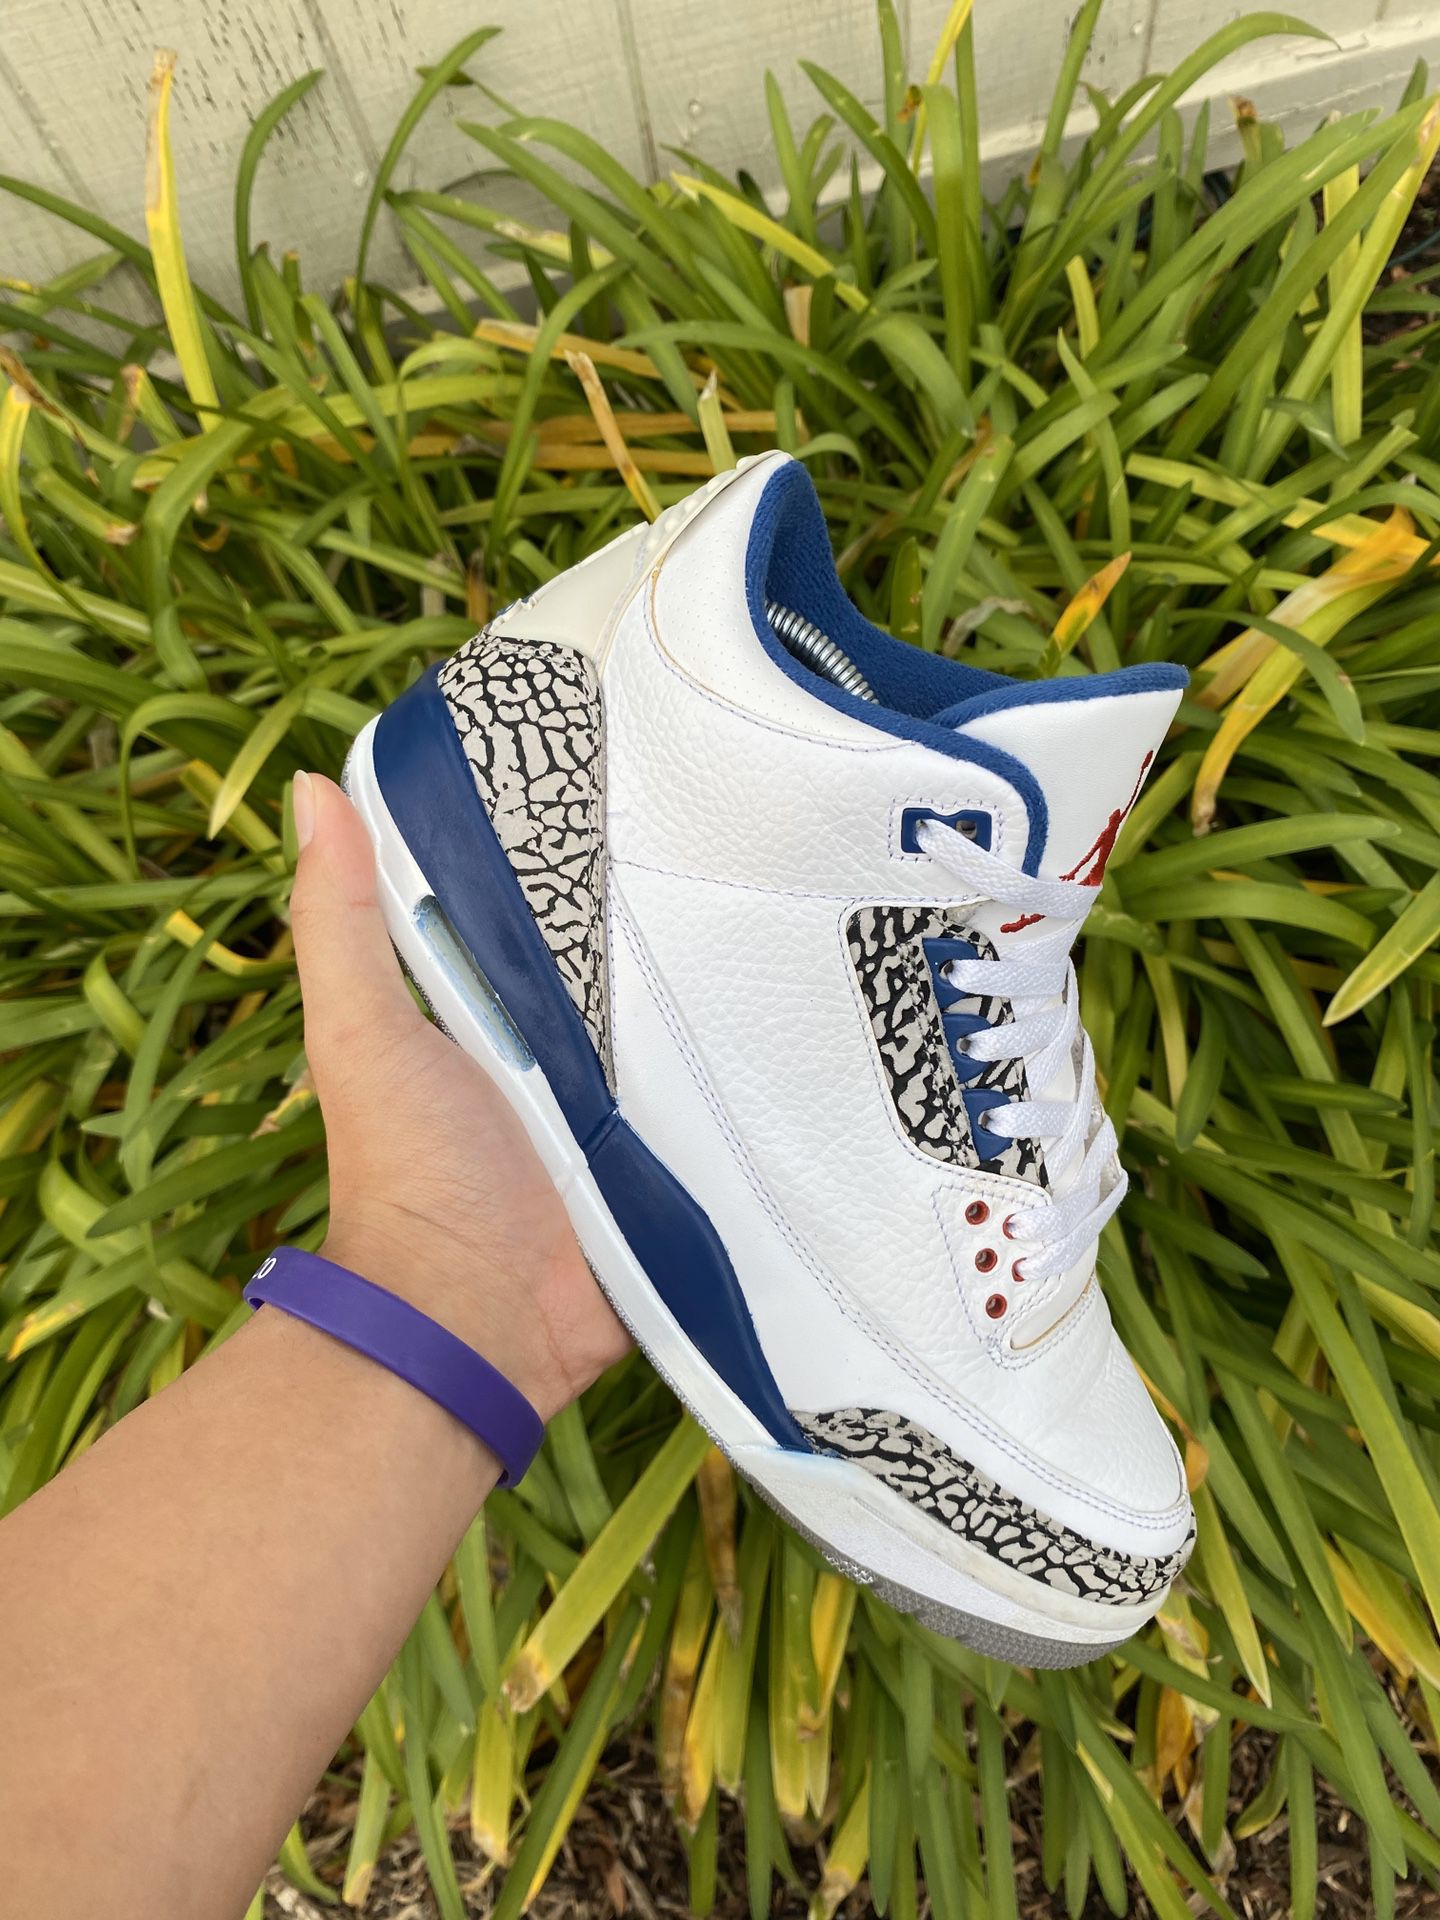 Air Jordan 3 True blue size 9